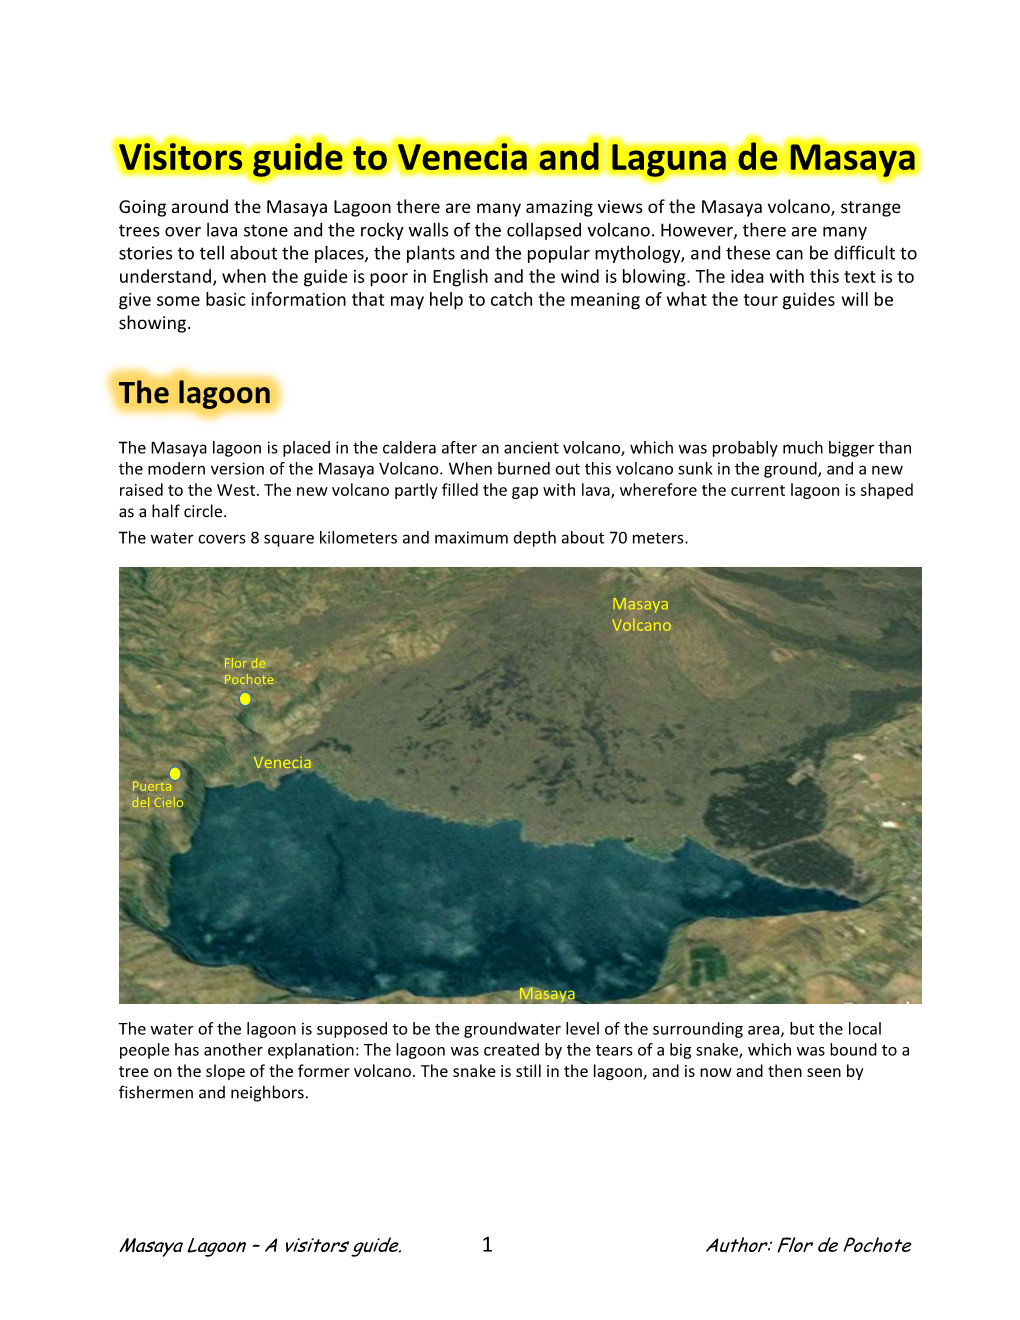 Visitors Guide to Venecia and Laguna De Masaya